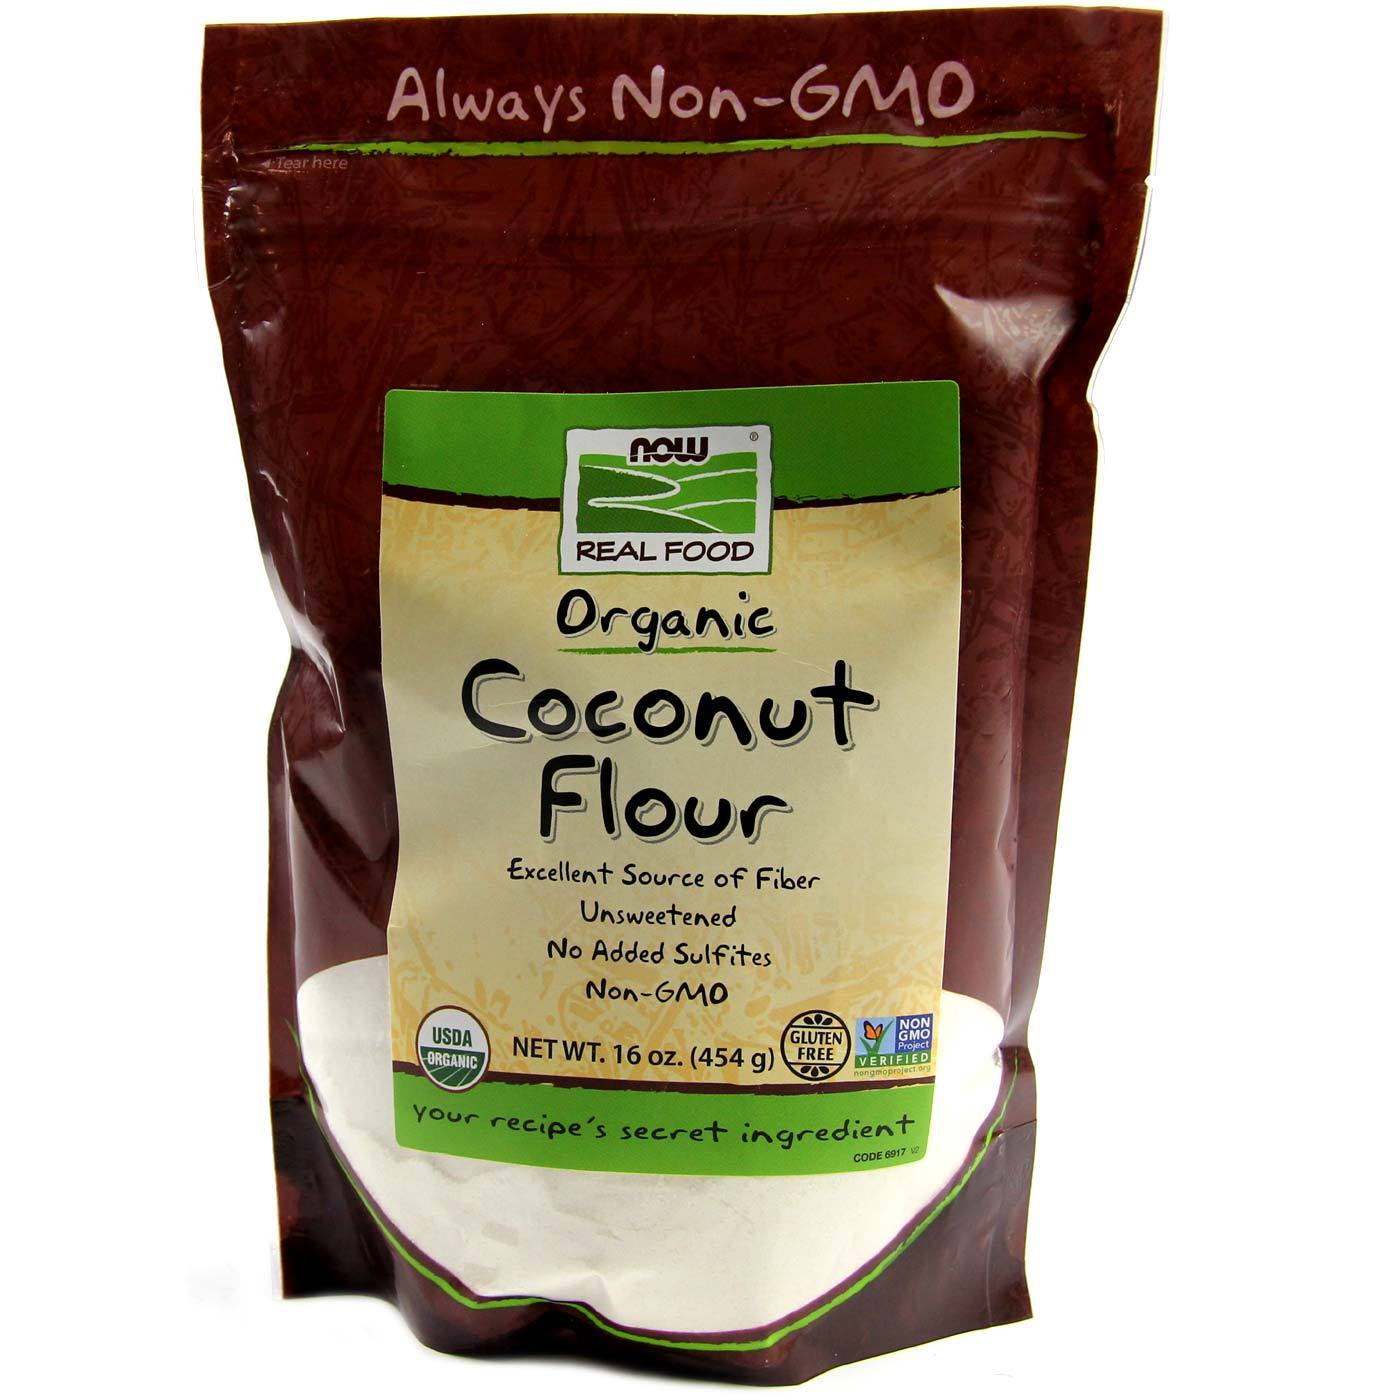 Sponsored: Nutiva Coconut Flour & Shortening - Celiac and the Beast